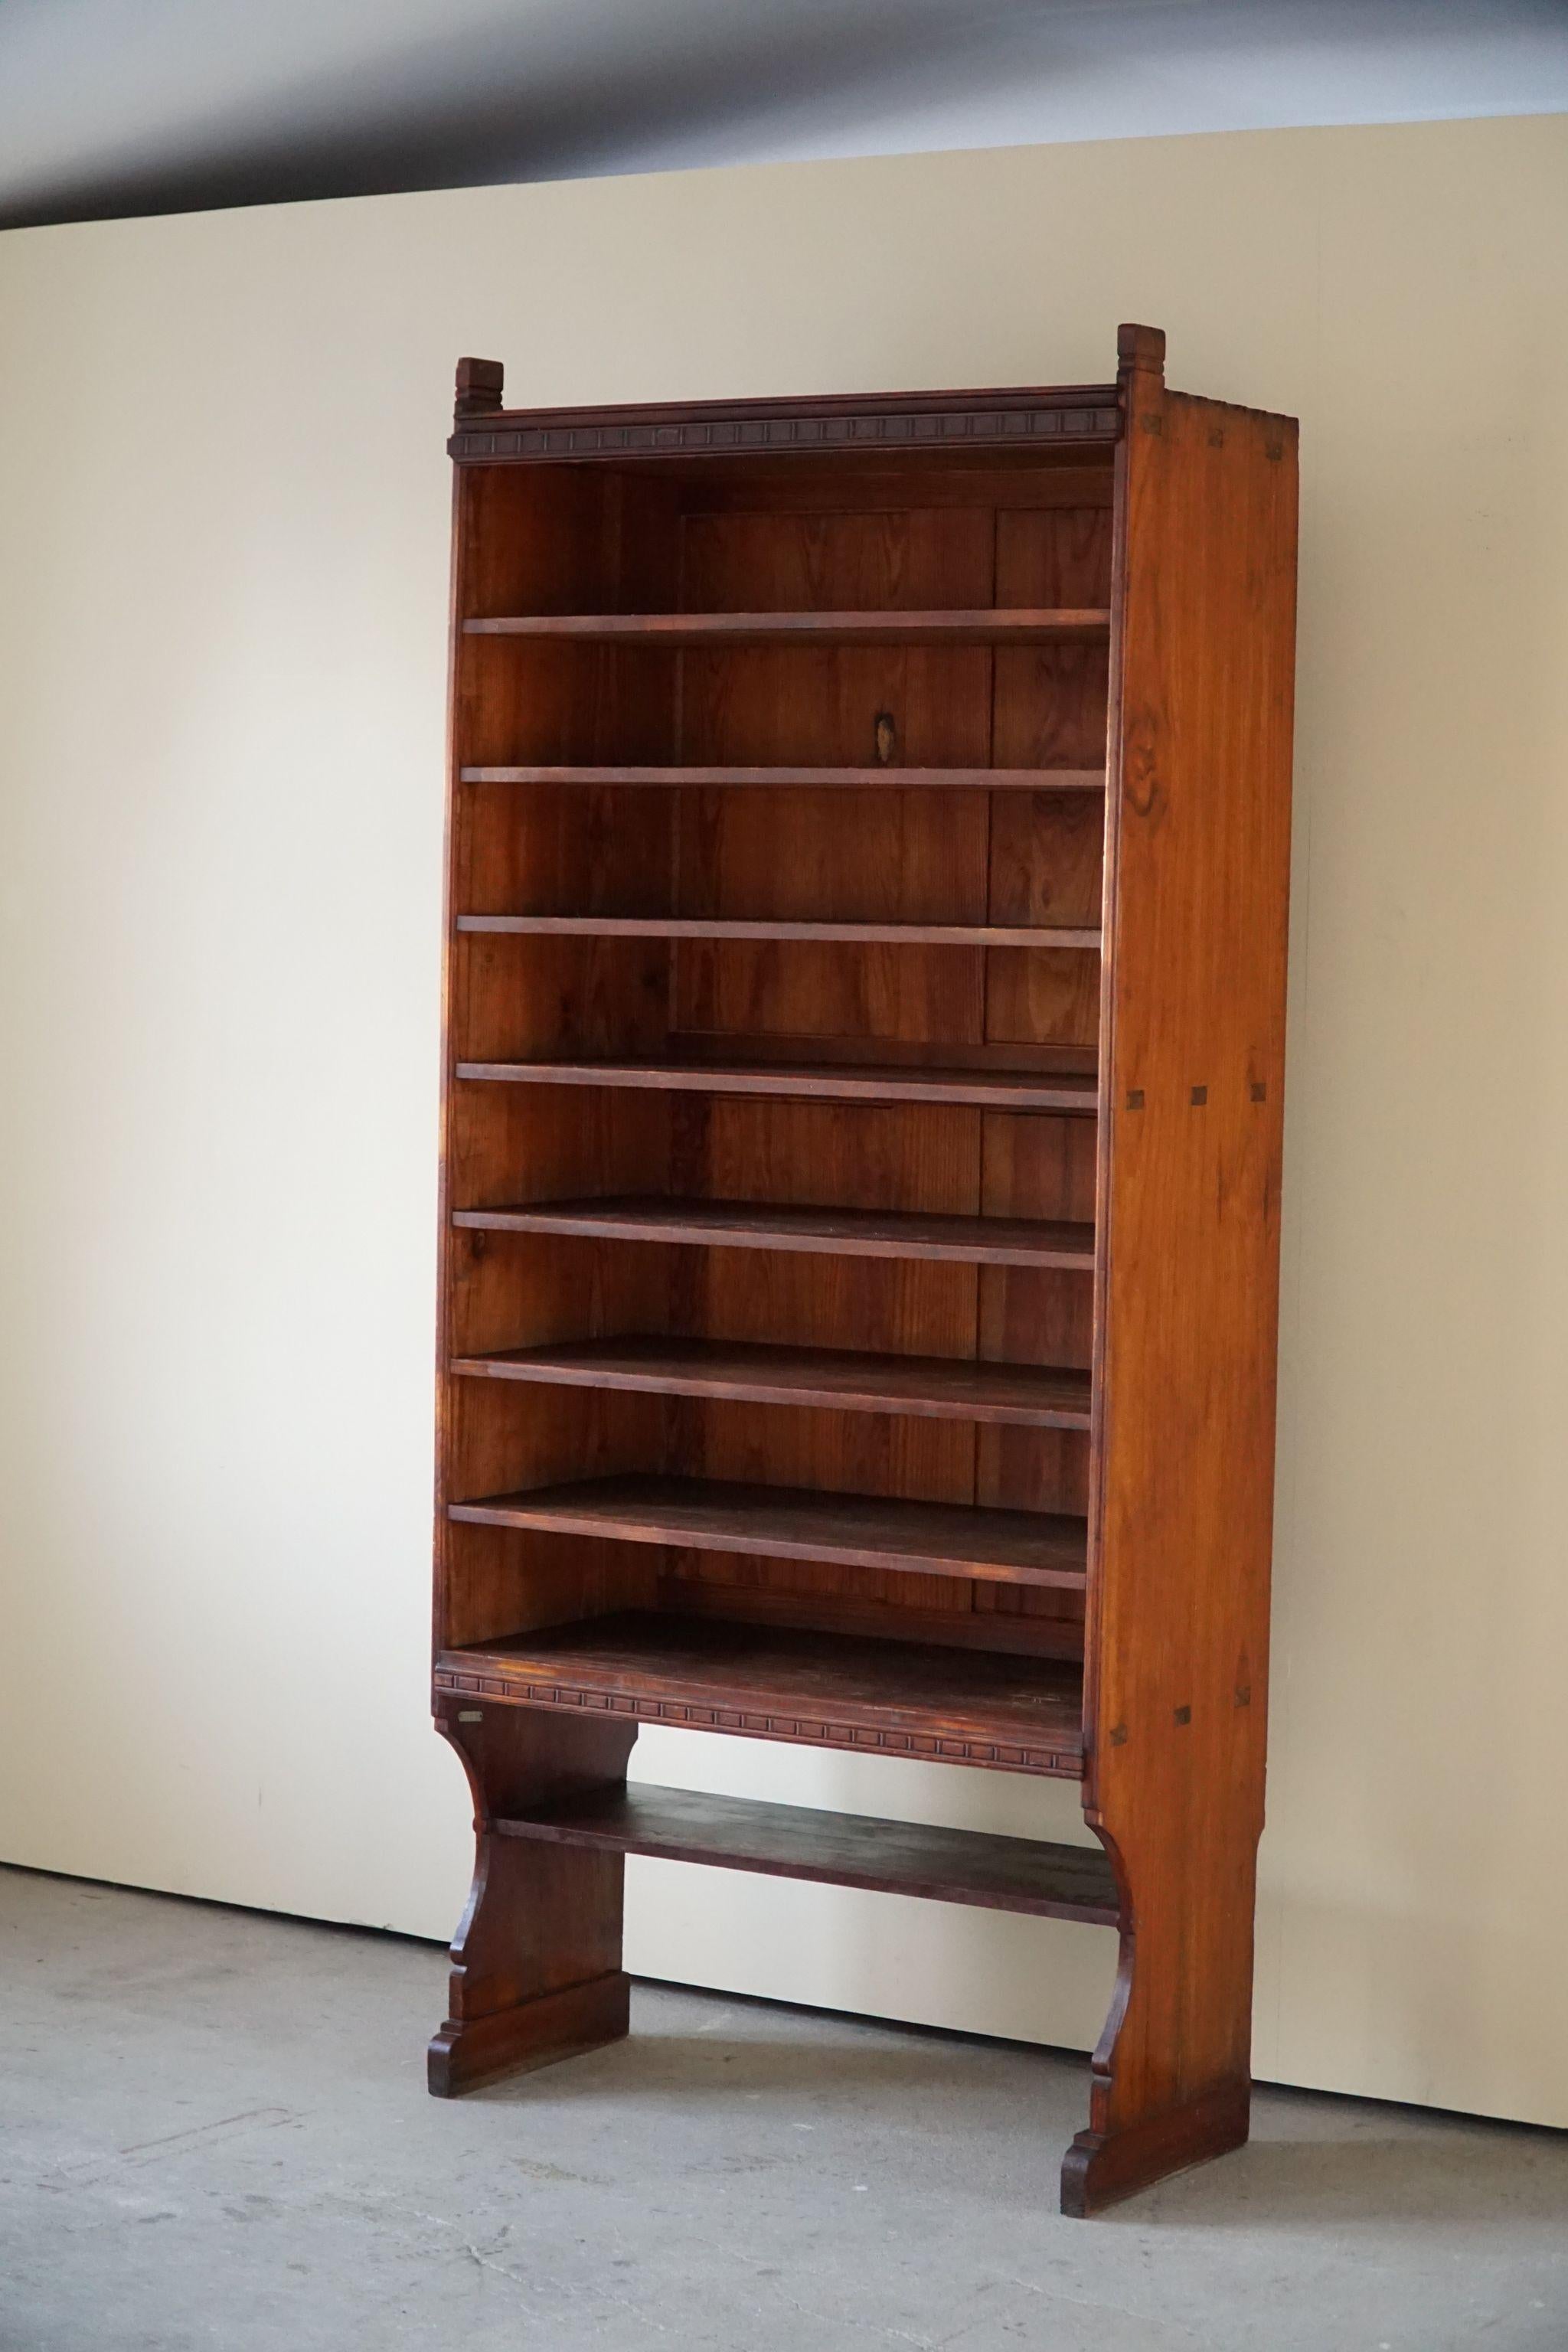 Martin Nyrop Bookcase by Rud. Rasmussen in Oregon Pine, Danish Modern, 1905 For Sale 5